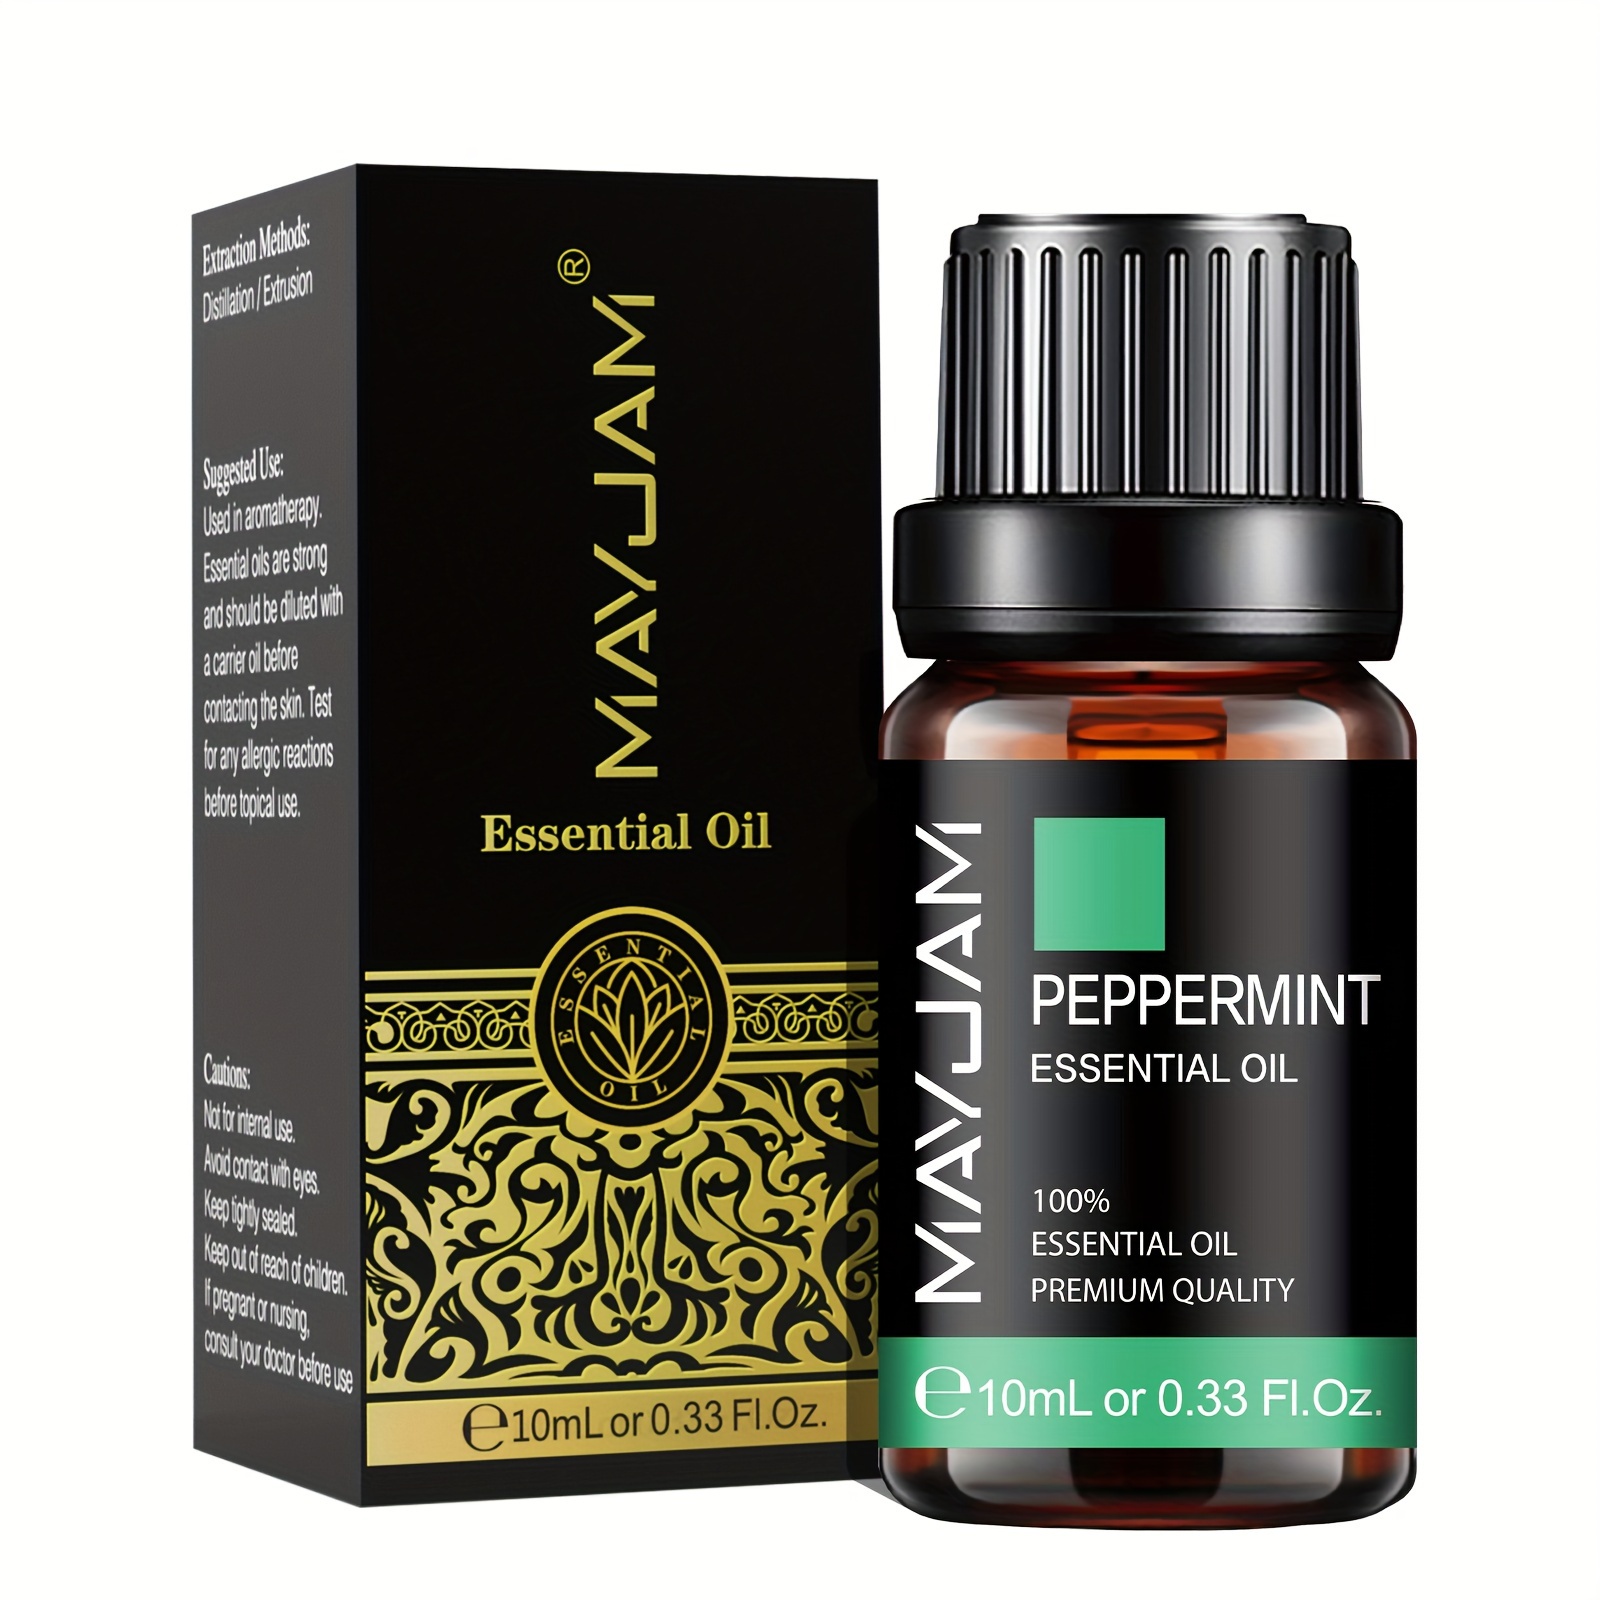 Rosemary Essential Oil Therapeutic Grade - Temu